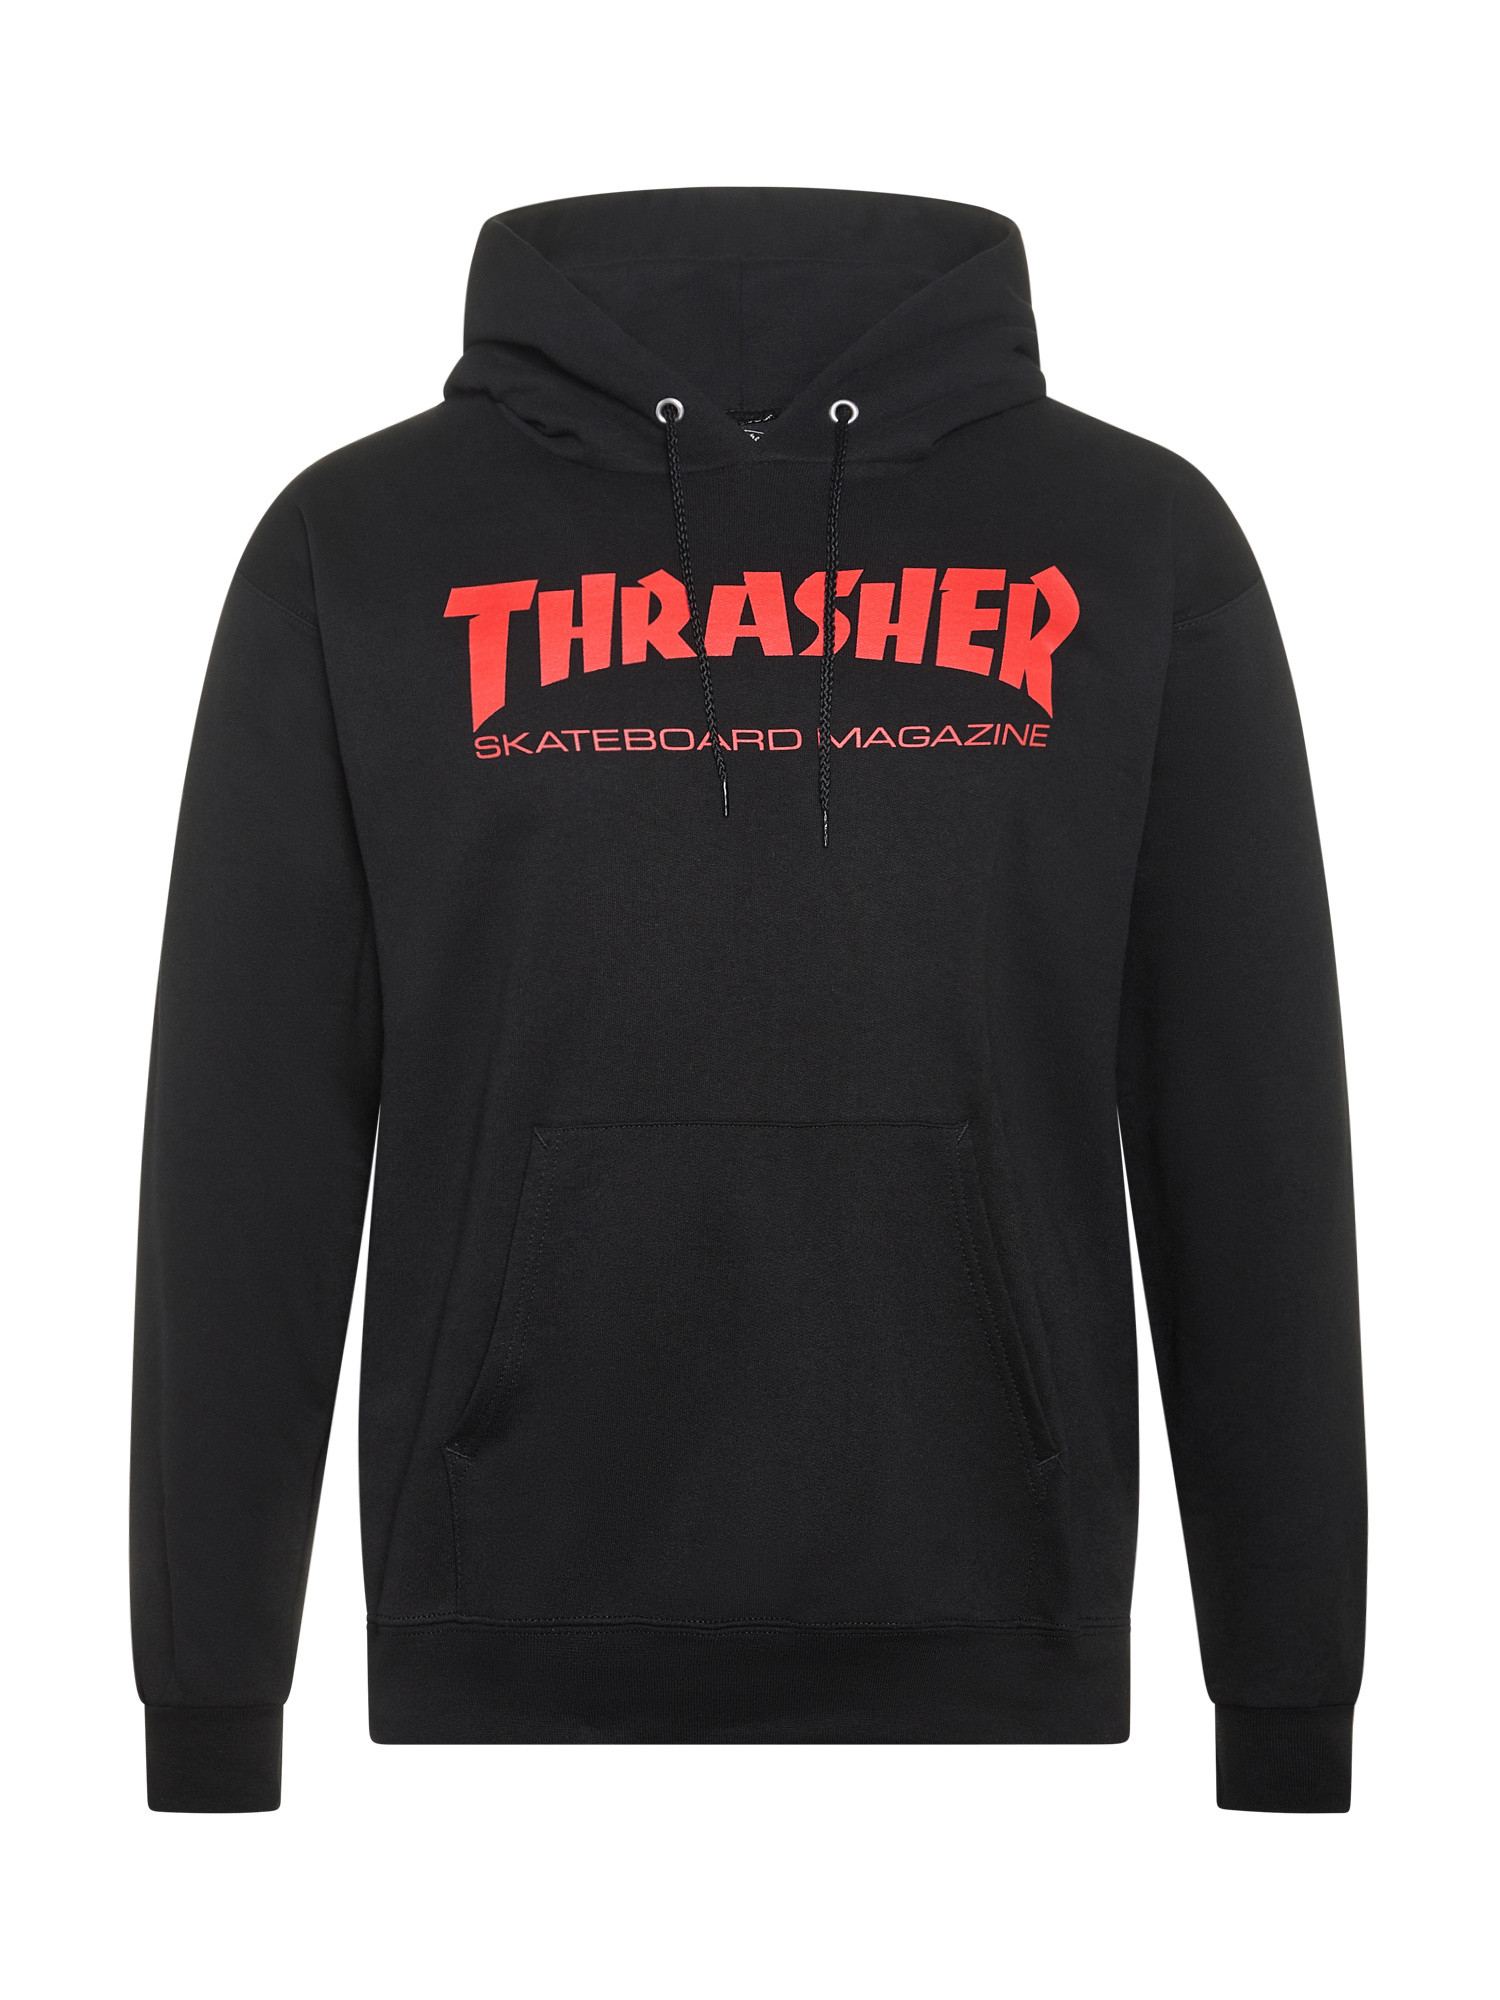 Thrasher толстовка с логотипом журнала Skate Magazine, черный